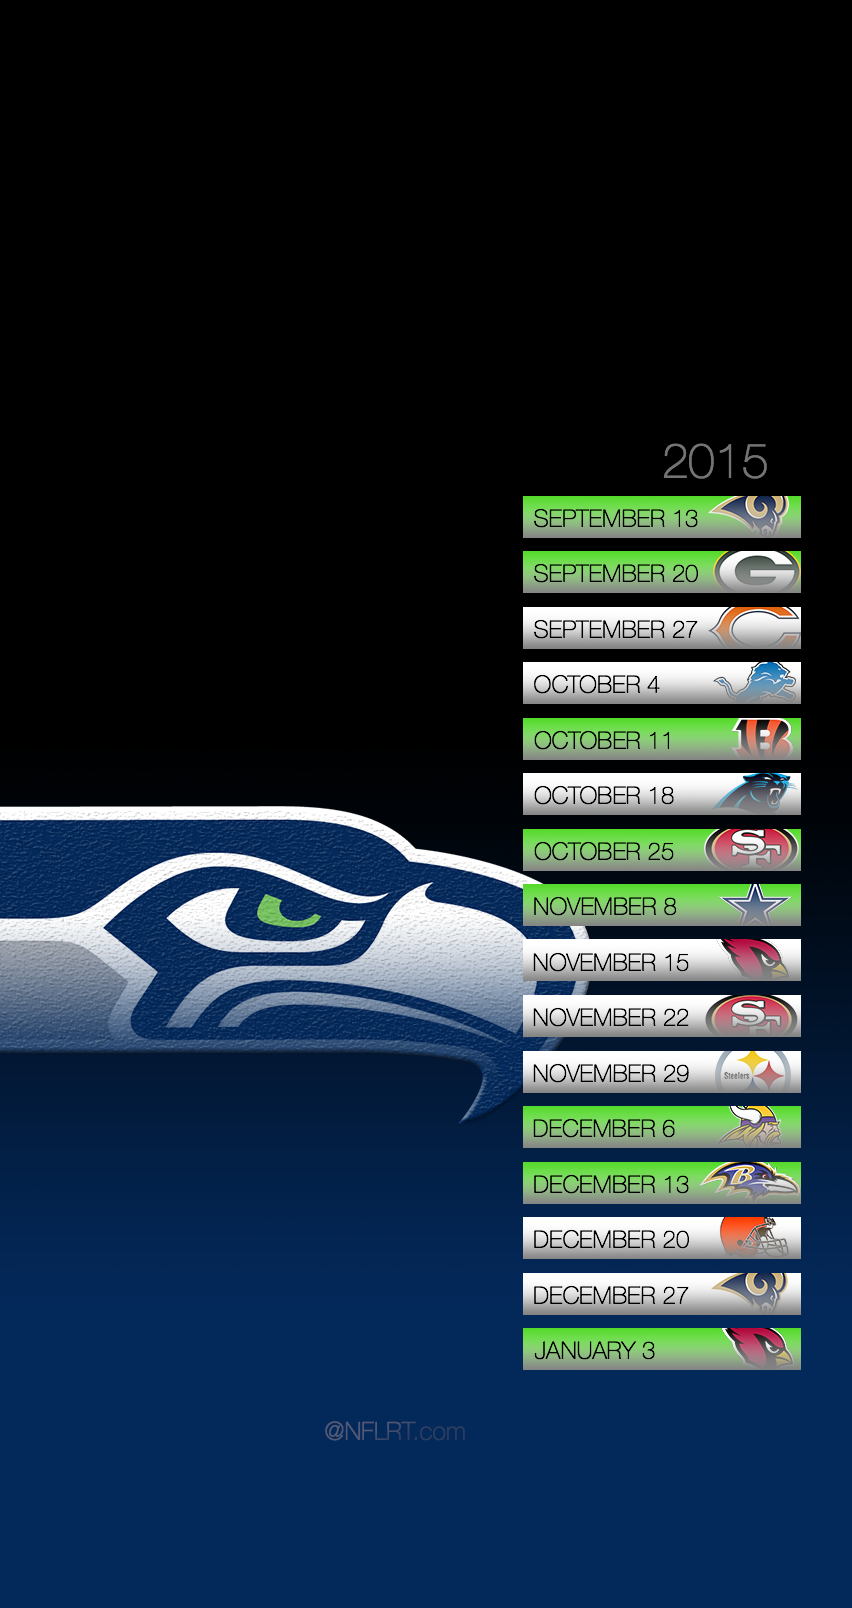 seahawks schedule 2015 by nflrt com http nflrt com 2015 nfl schedule